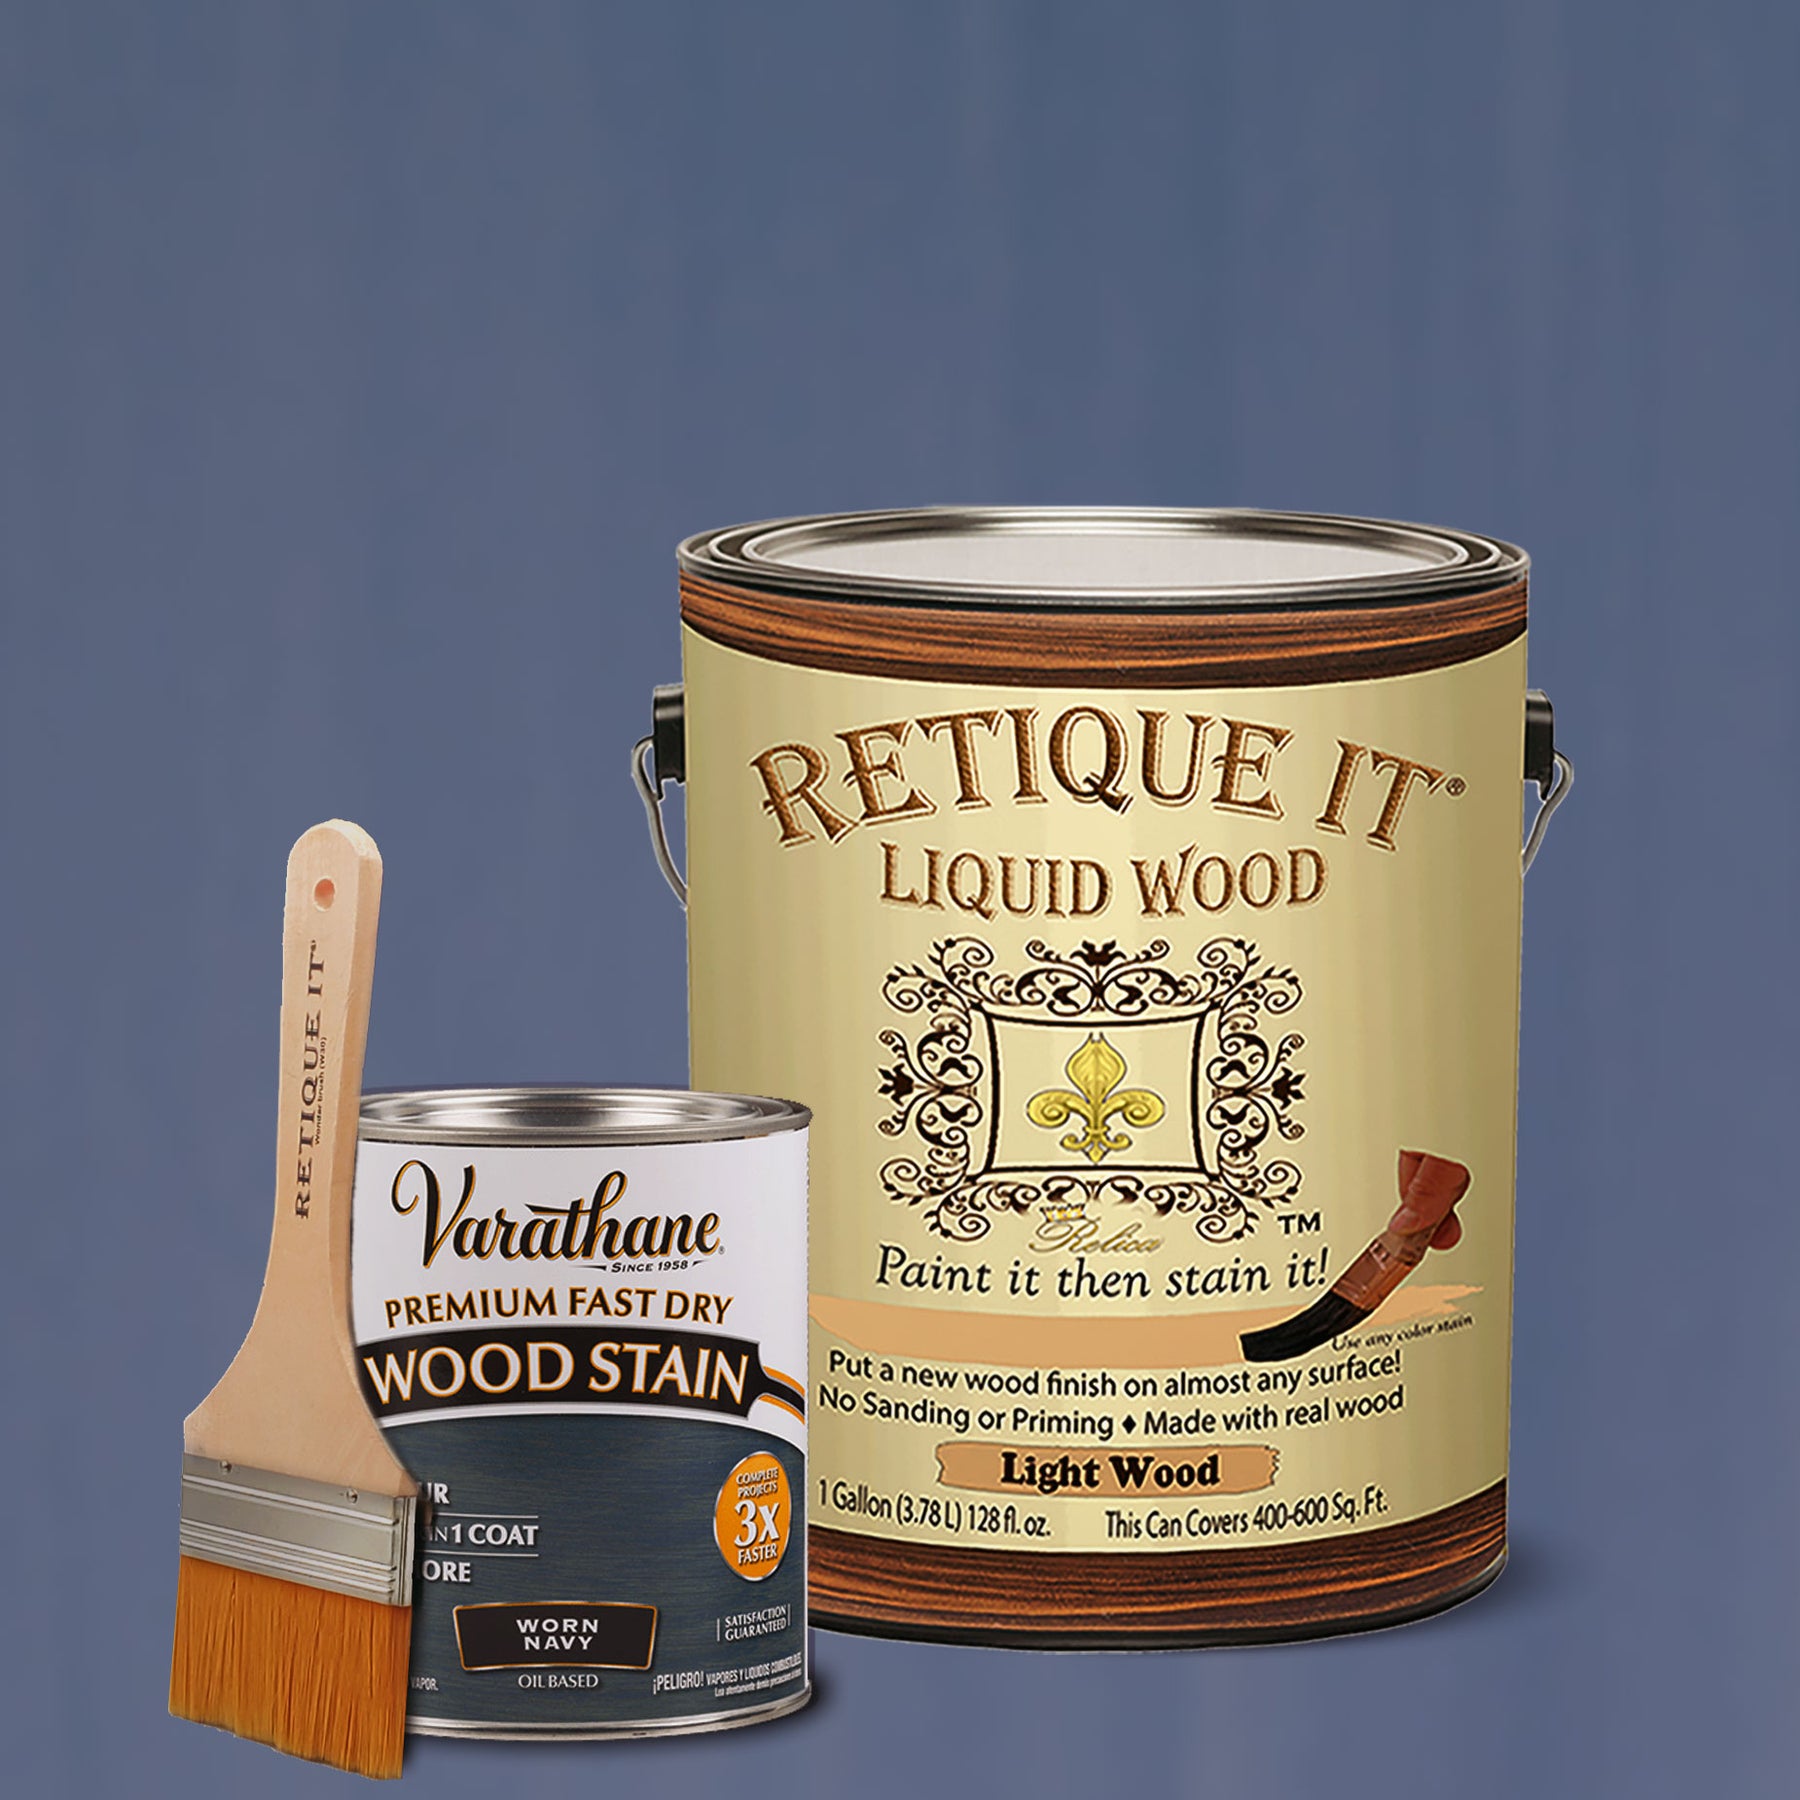 Retique It Liquid Wood - Light Wood Half Pint (8oz) - Paint It Then Stain  It - Stainable Wood Fiber Paint - Put a Fresh Coat of Wood On It